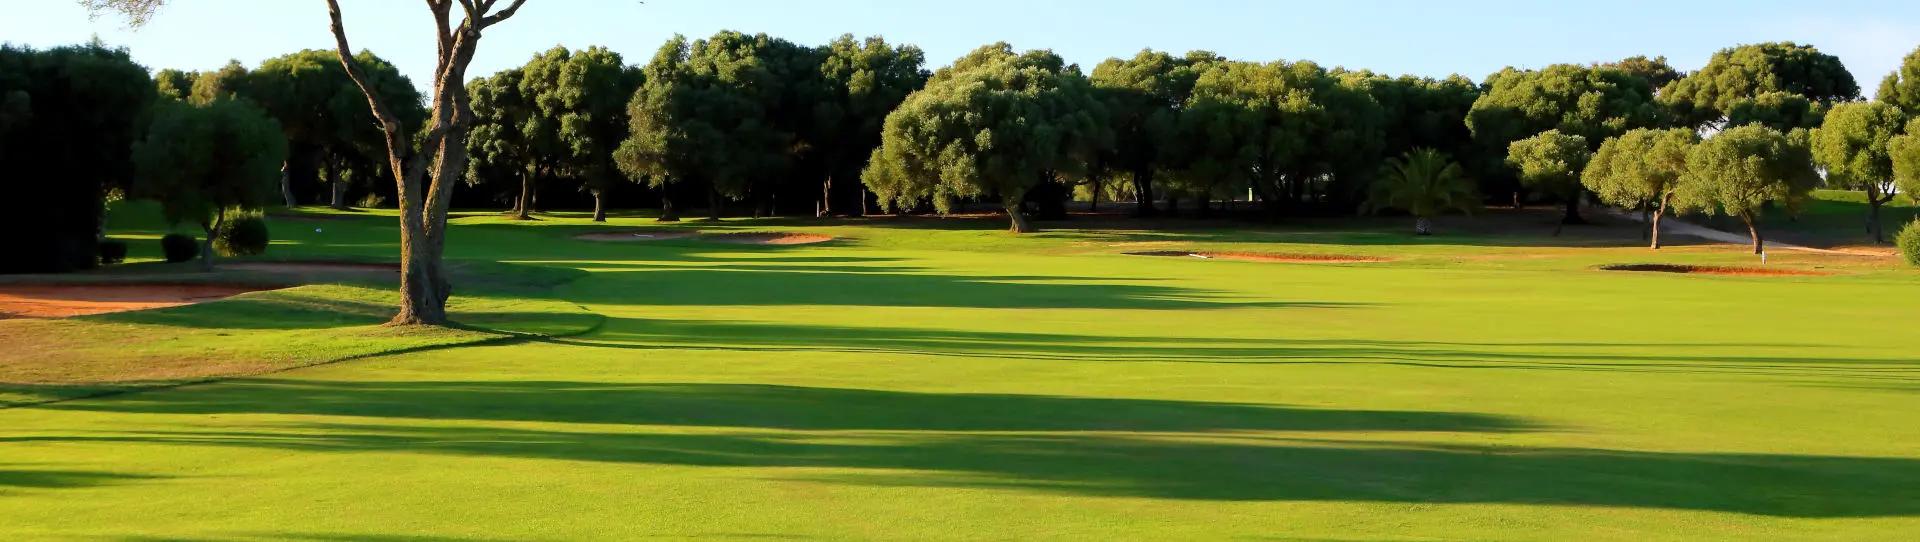 Spain golf courses - Montenmedio - Photo 3